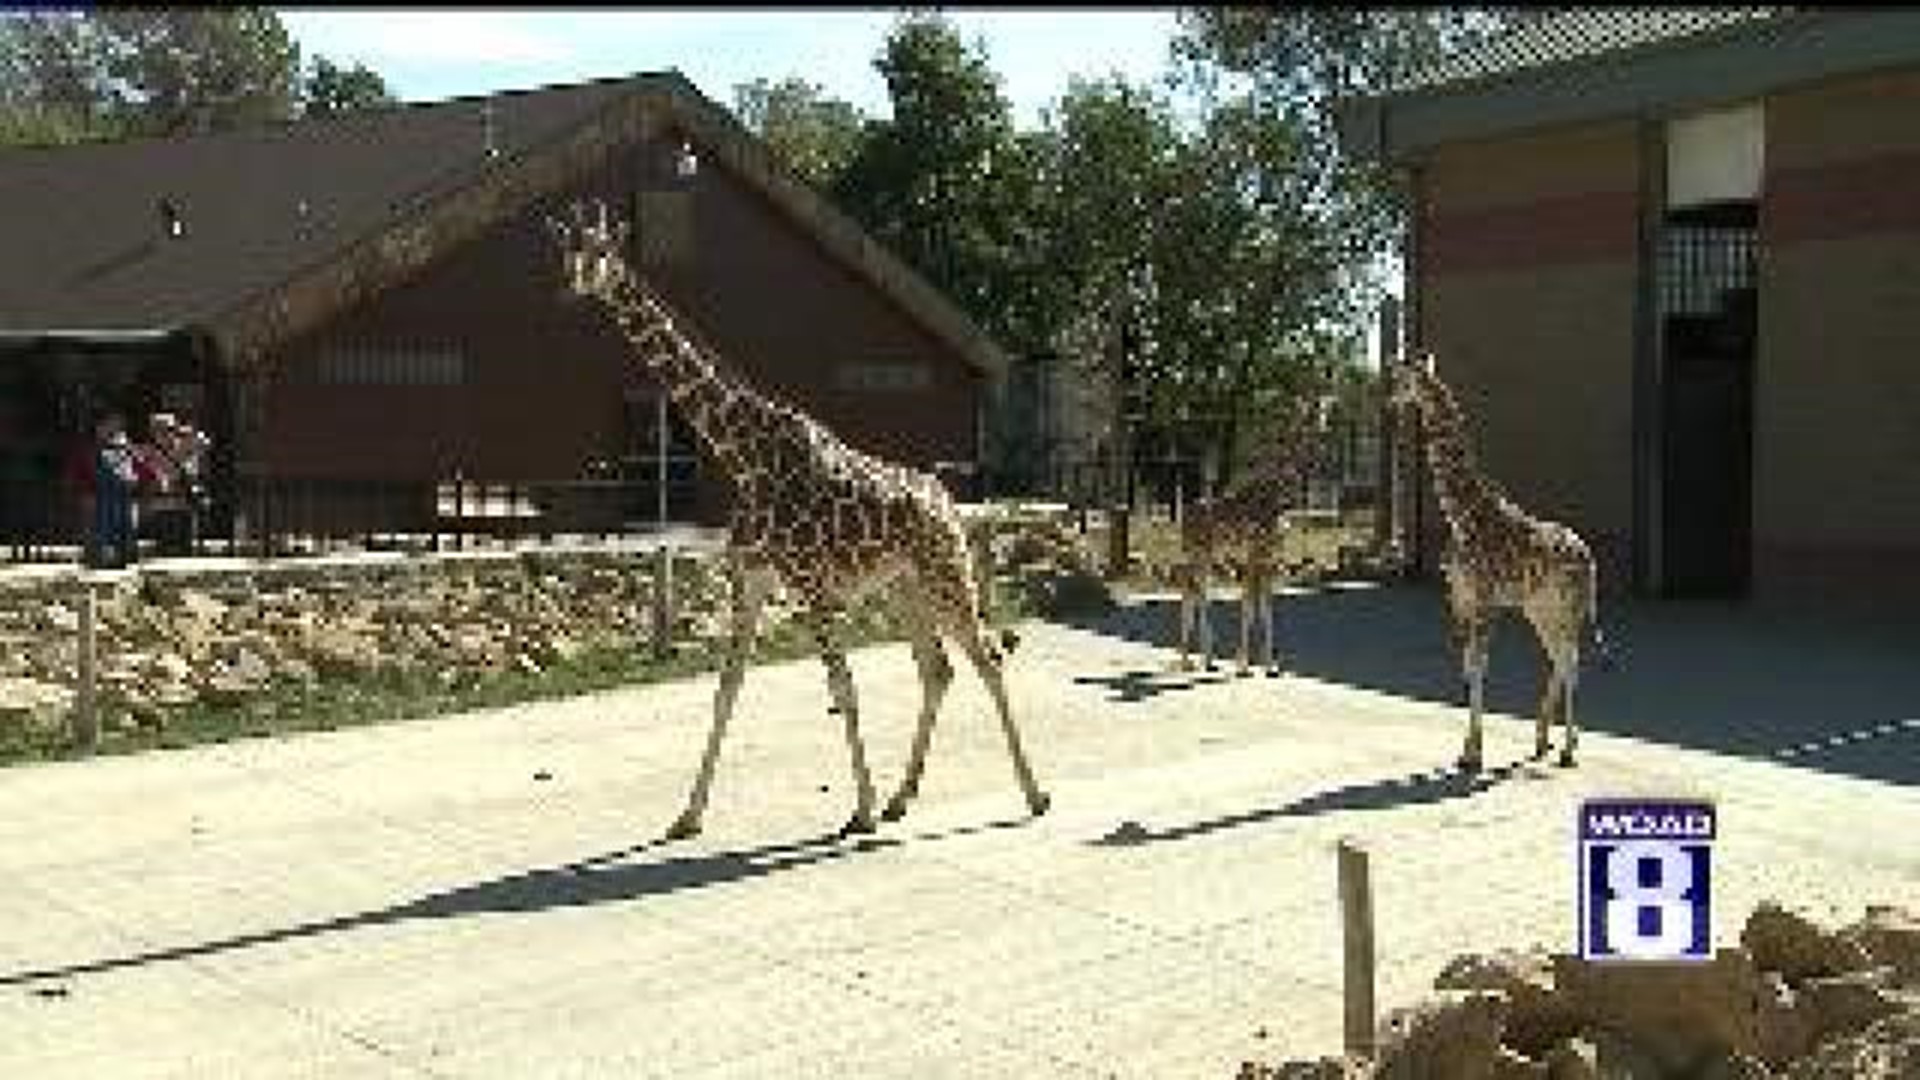 Niabi Zoo recruits Junior Zookeepers